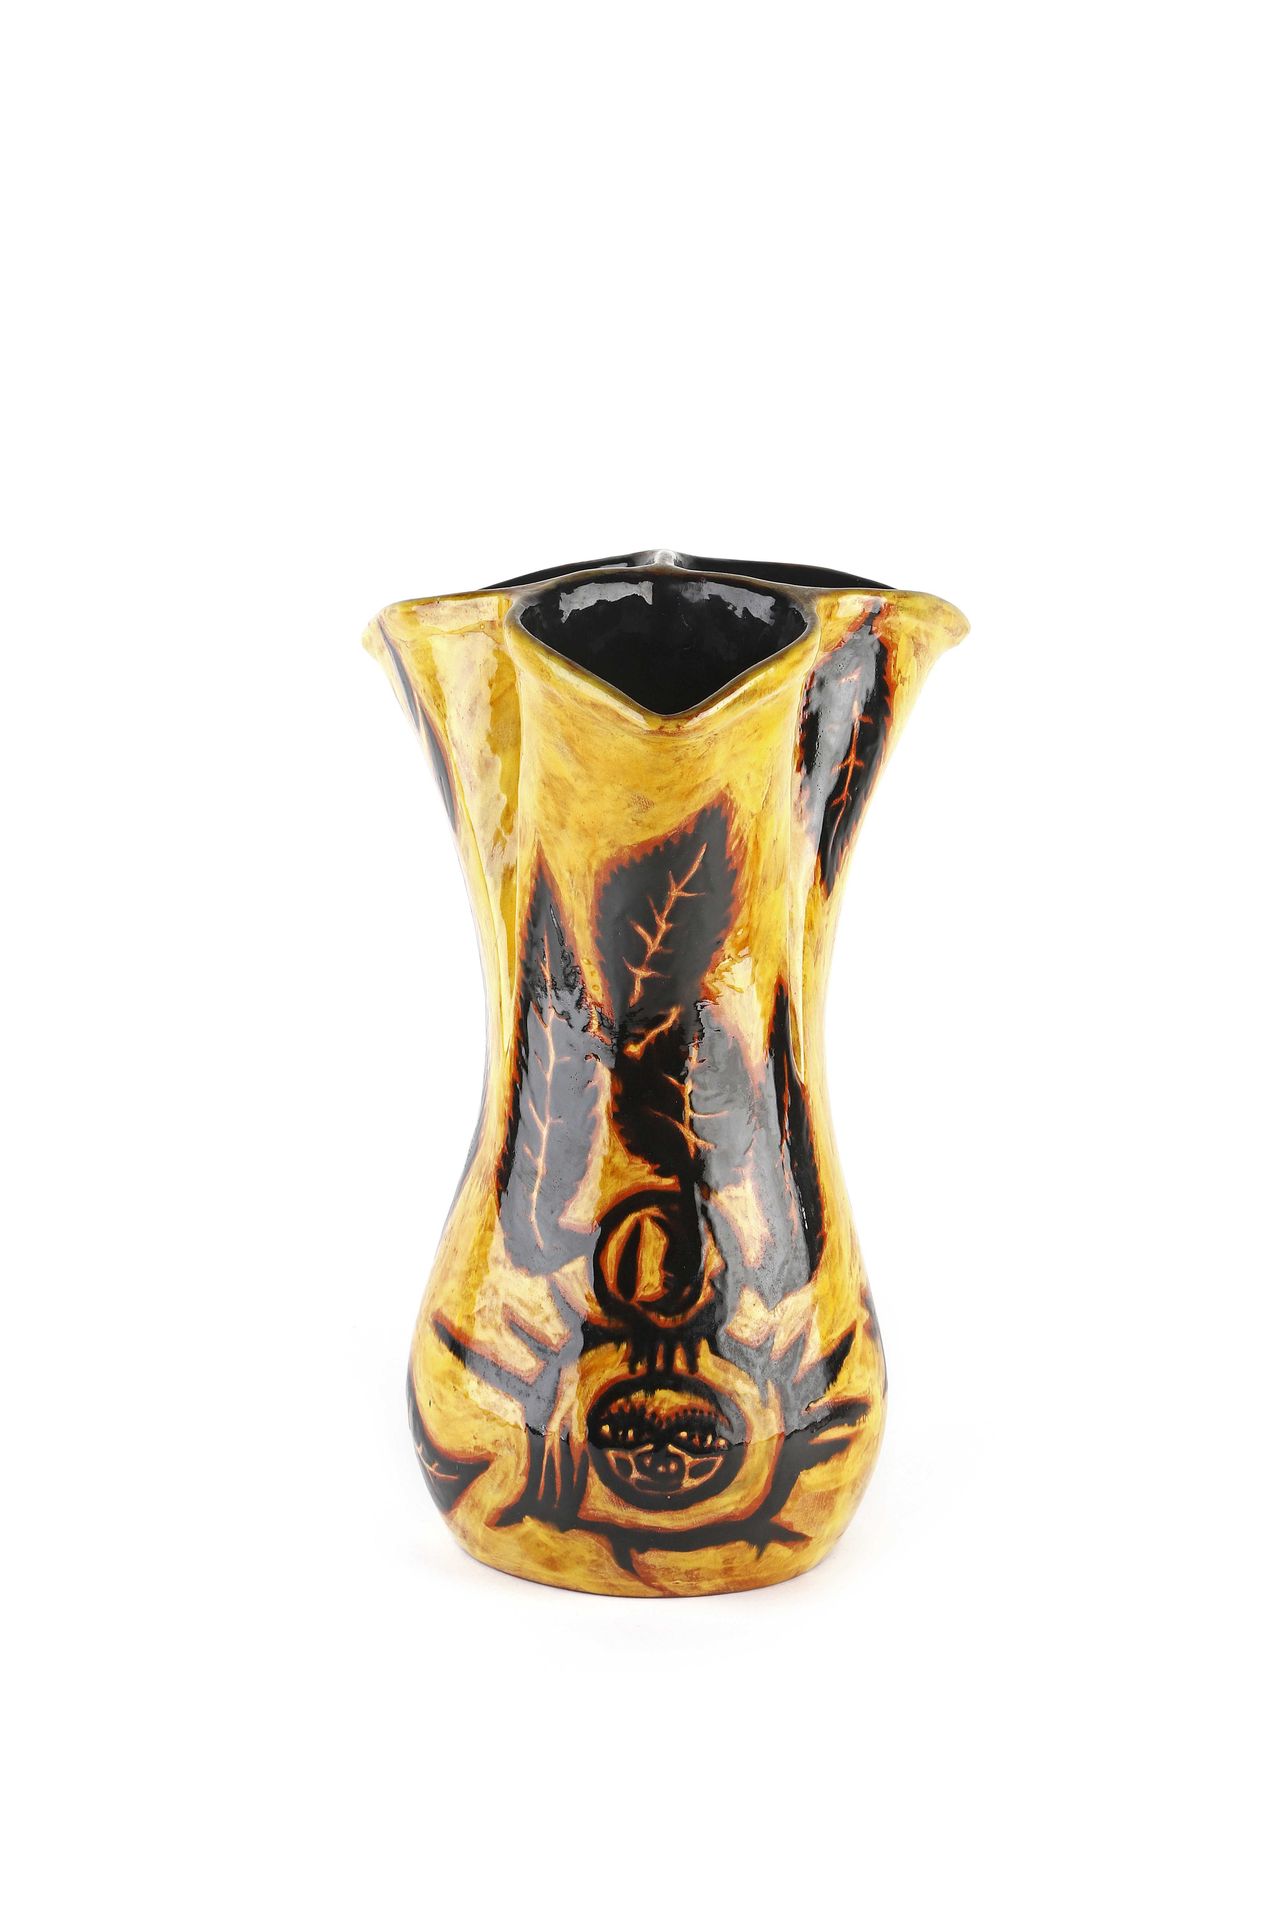 Jean LURÇAT (1892-1966) 花瓶
陶器 
签名
H.40厘米。
圣维琴斯，约1955年

陶器花瓶 已签名
H.15.75英寸